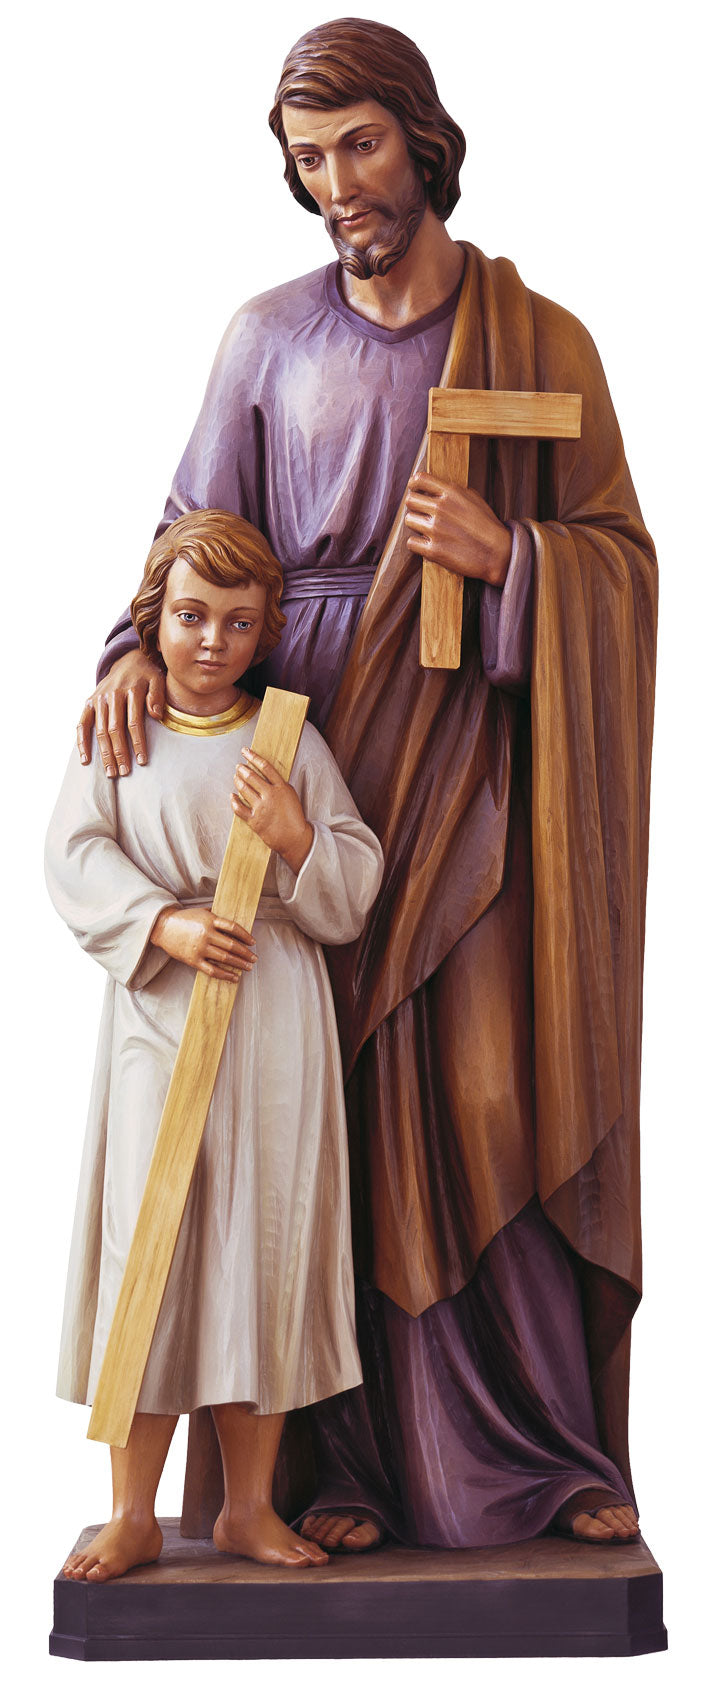 st-joseph-with-child-jesus-statue-340-105.jpg